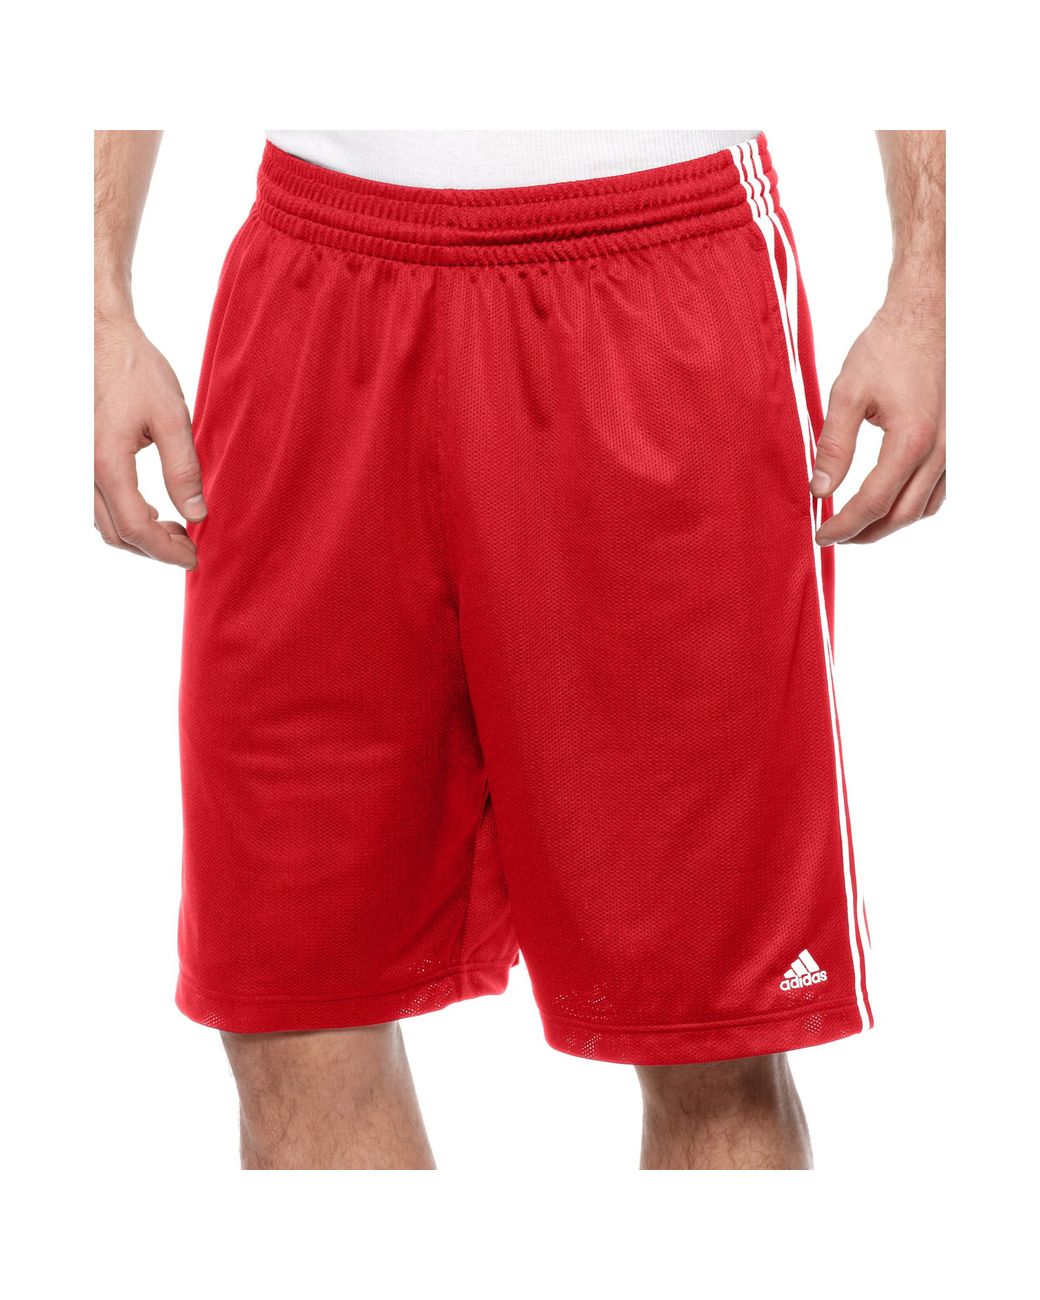 Mesh Basketball Shorts